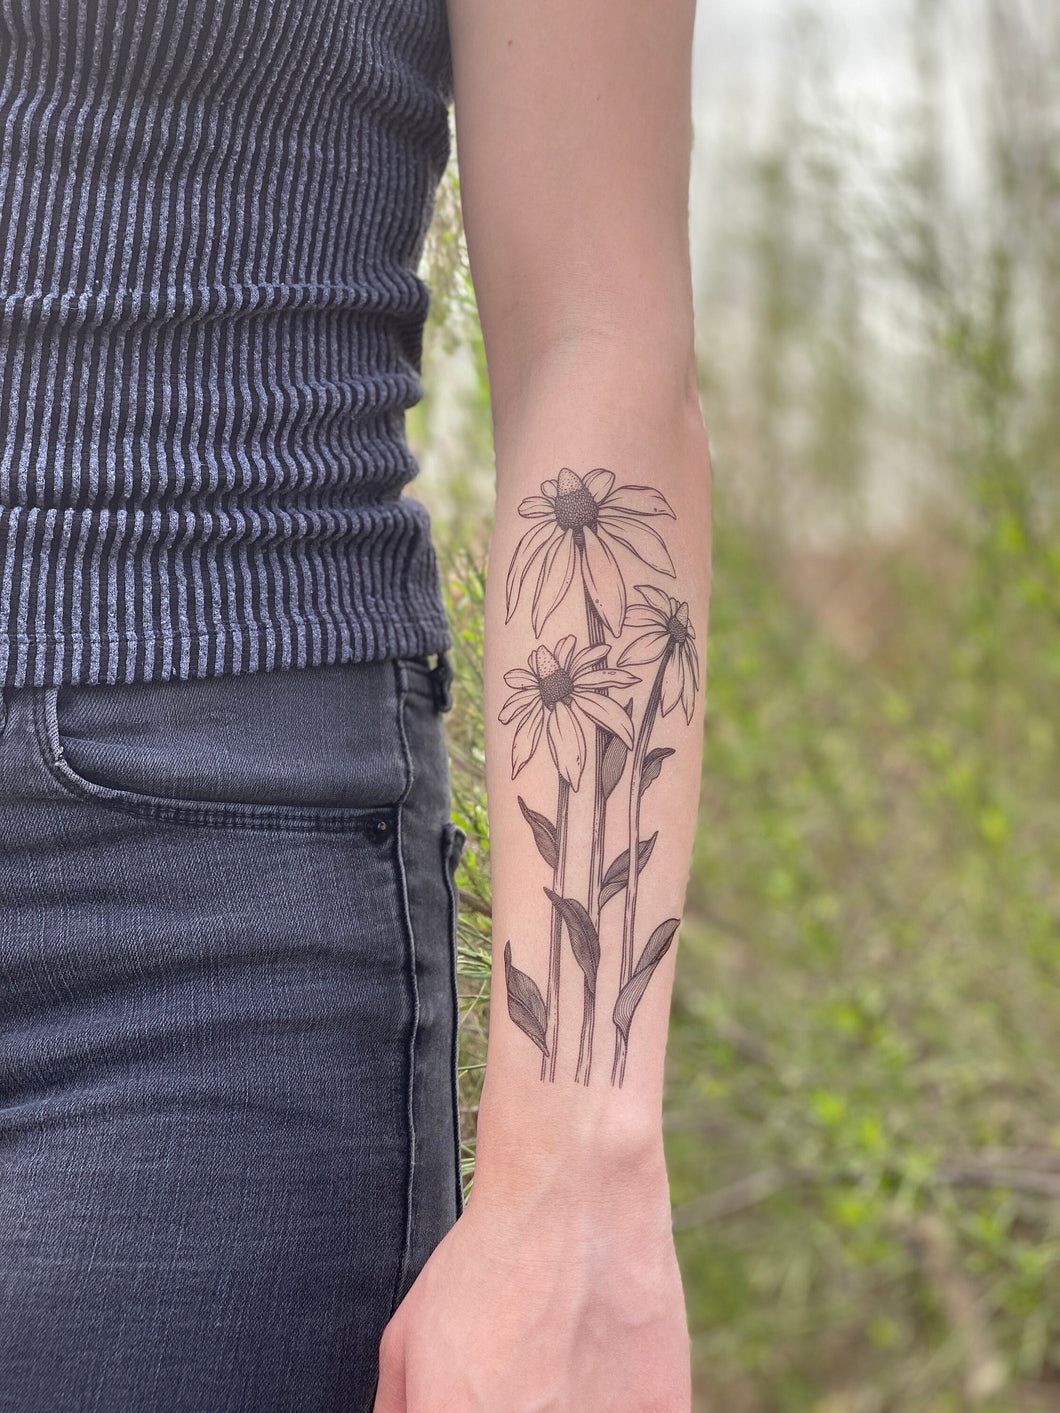 simple nature tattoo